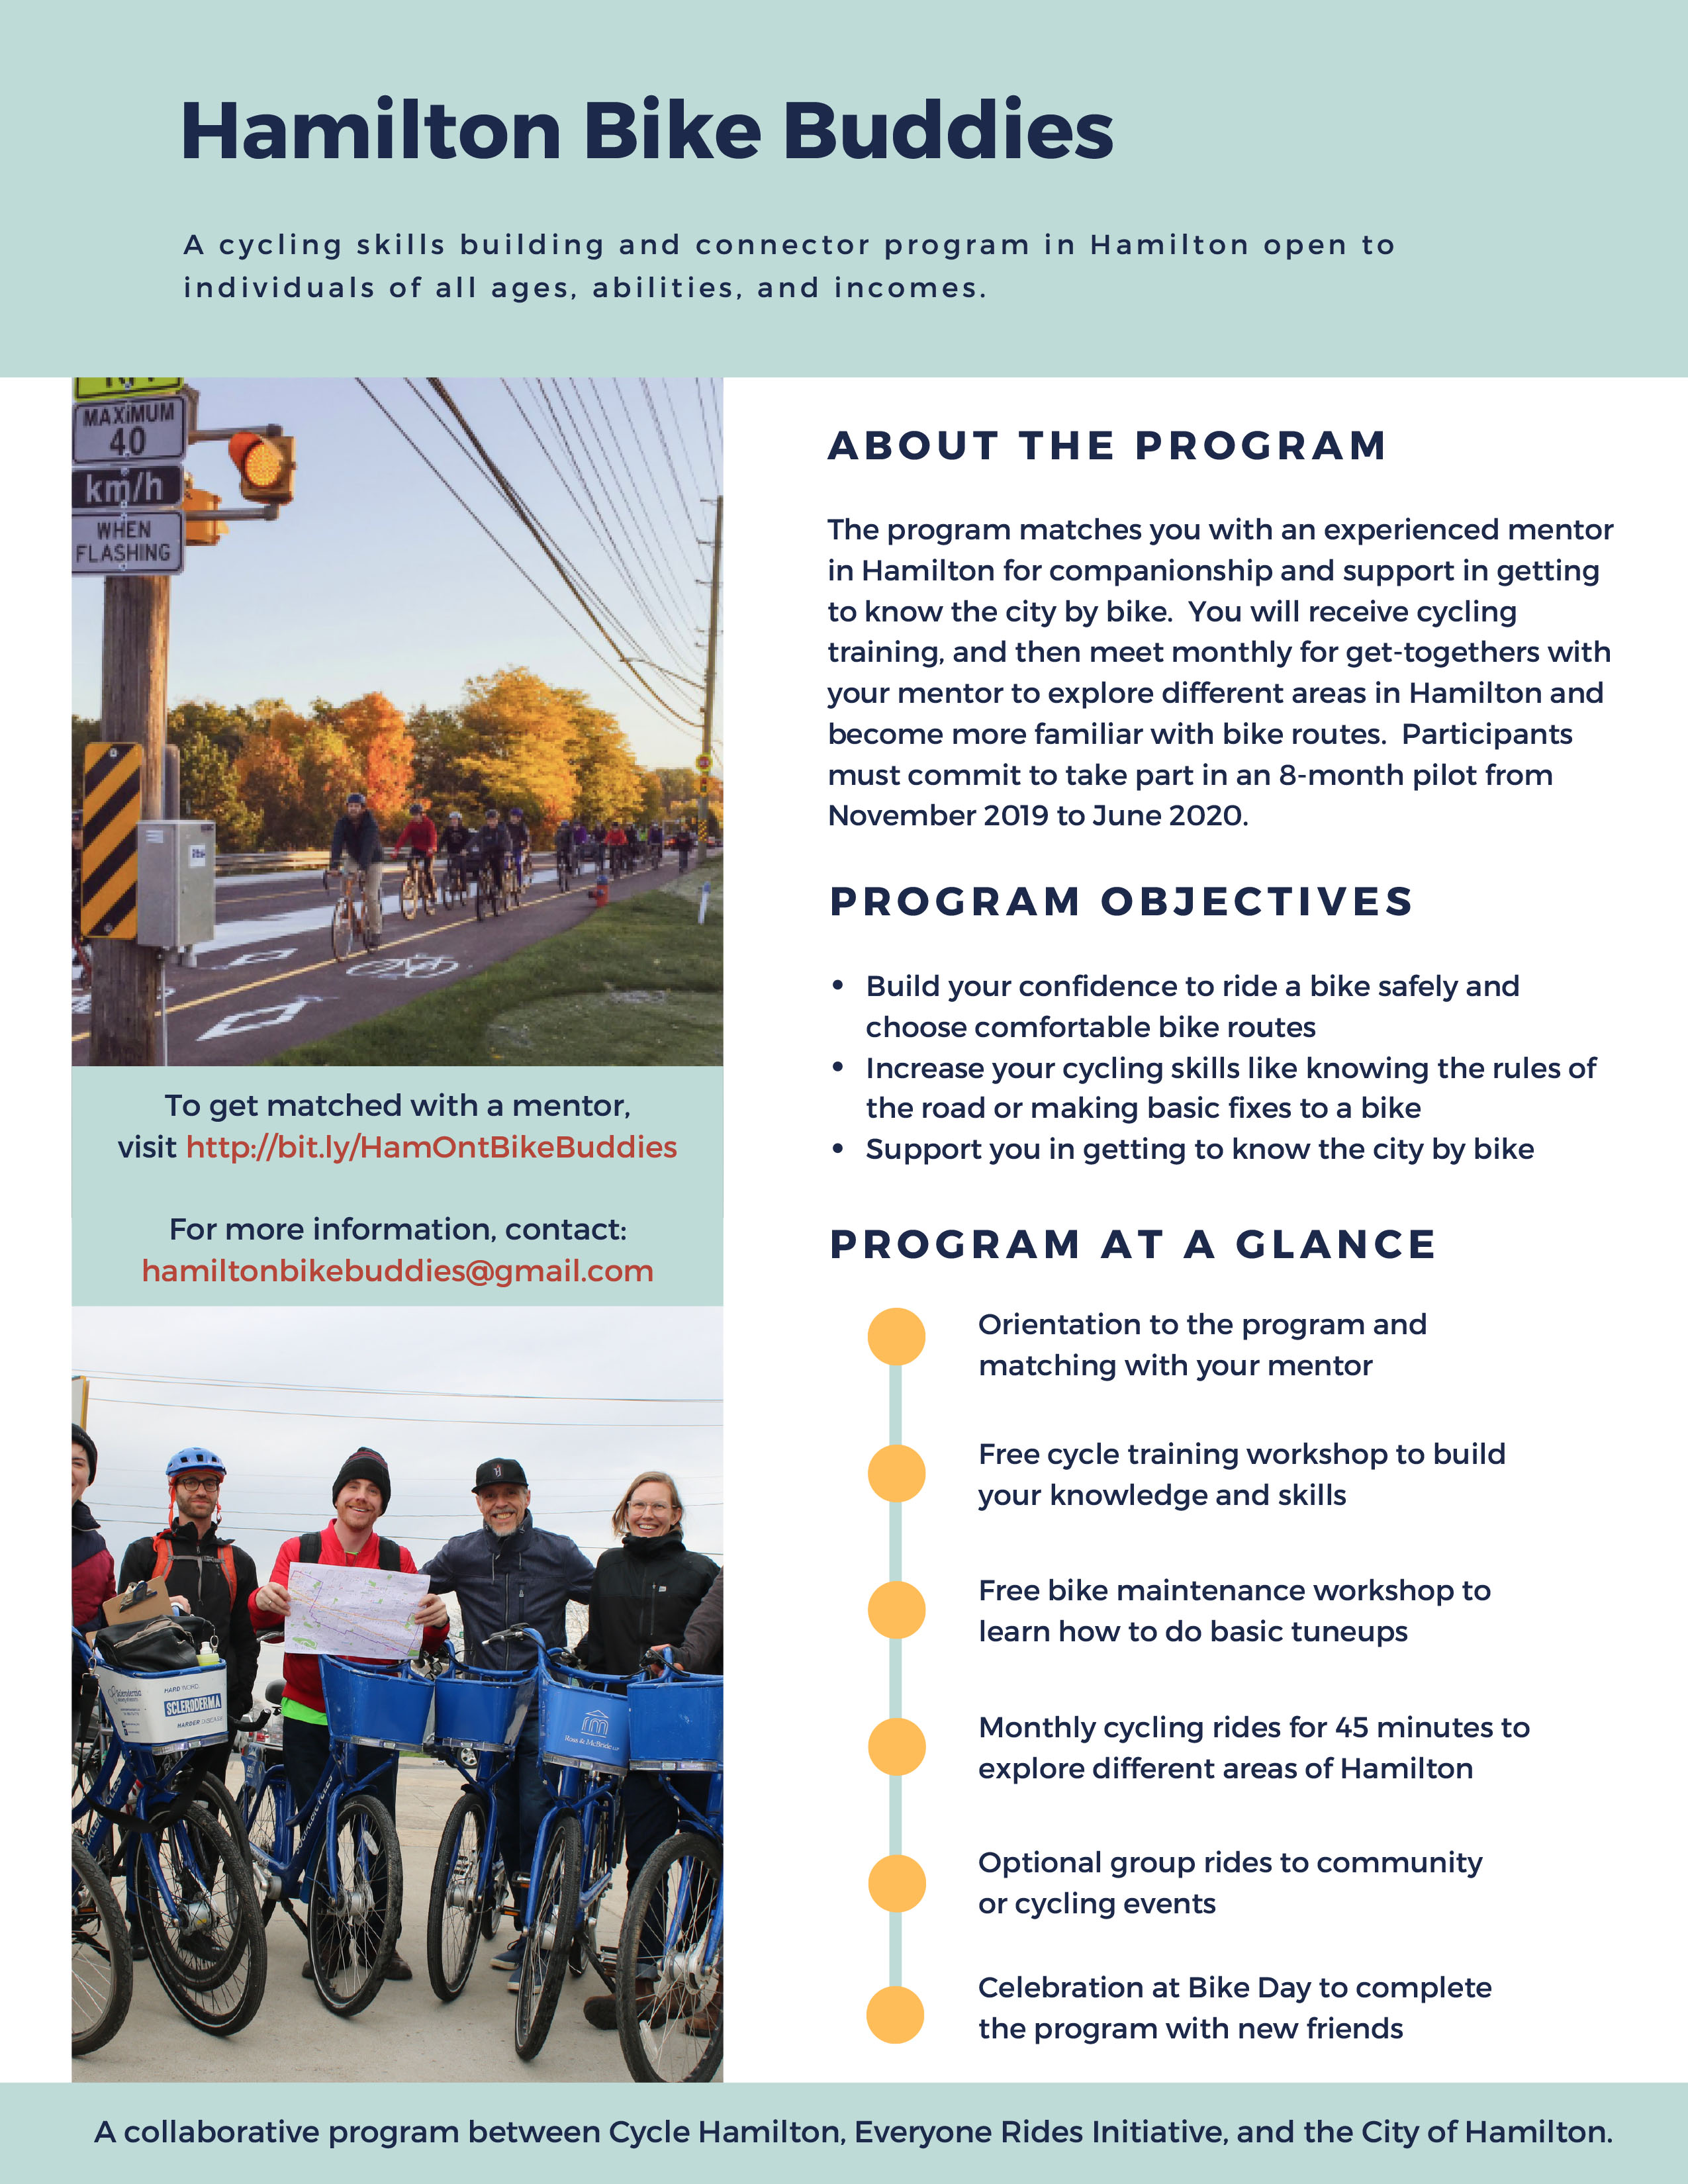 https://www.cyclehamont.ca/wp-content/uploads/2019/10/Bike_Buddy_Program__Promotional_Material-1.jpg